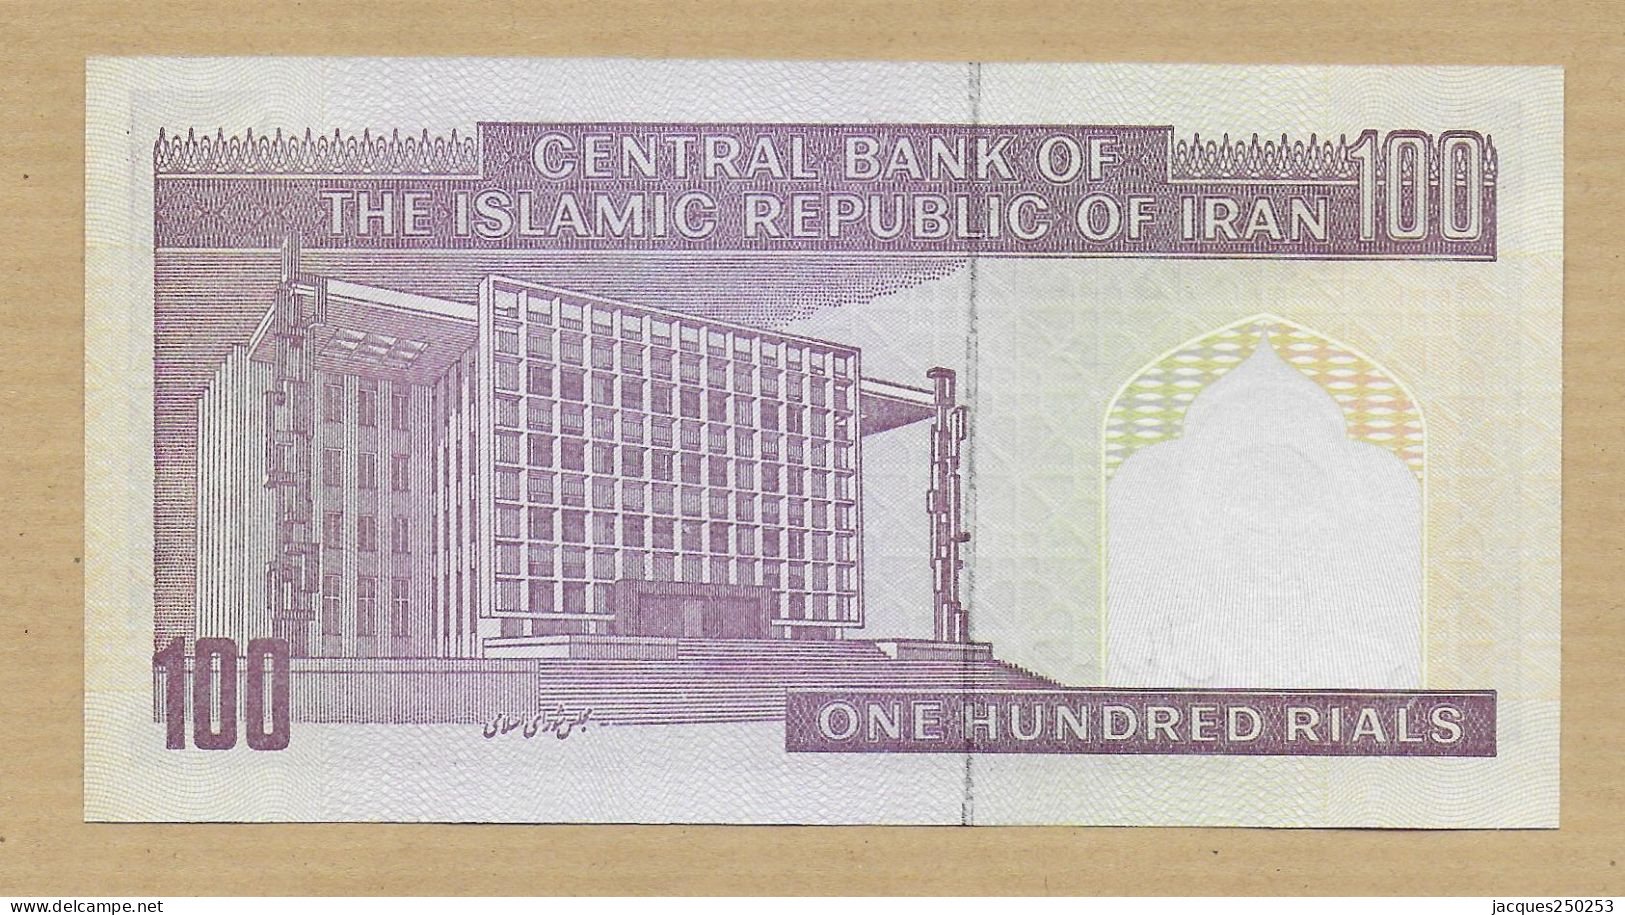 100 RIALS SIGN. SHEIBANI - HOSSENI  NEUF - Iran